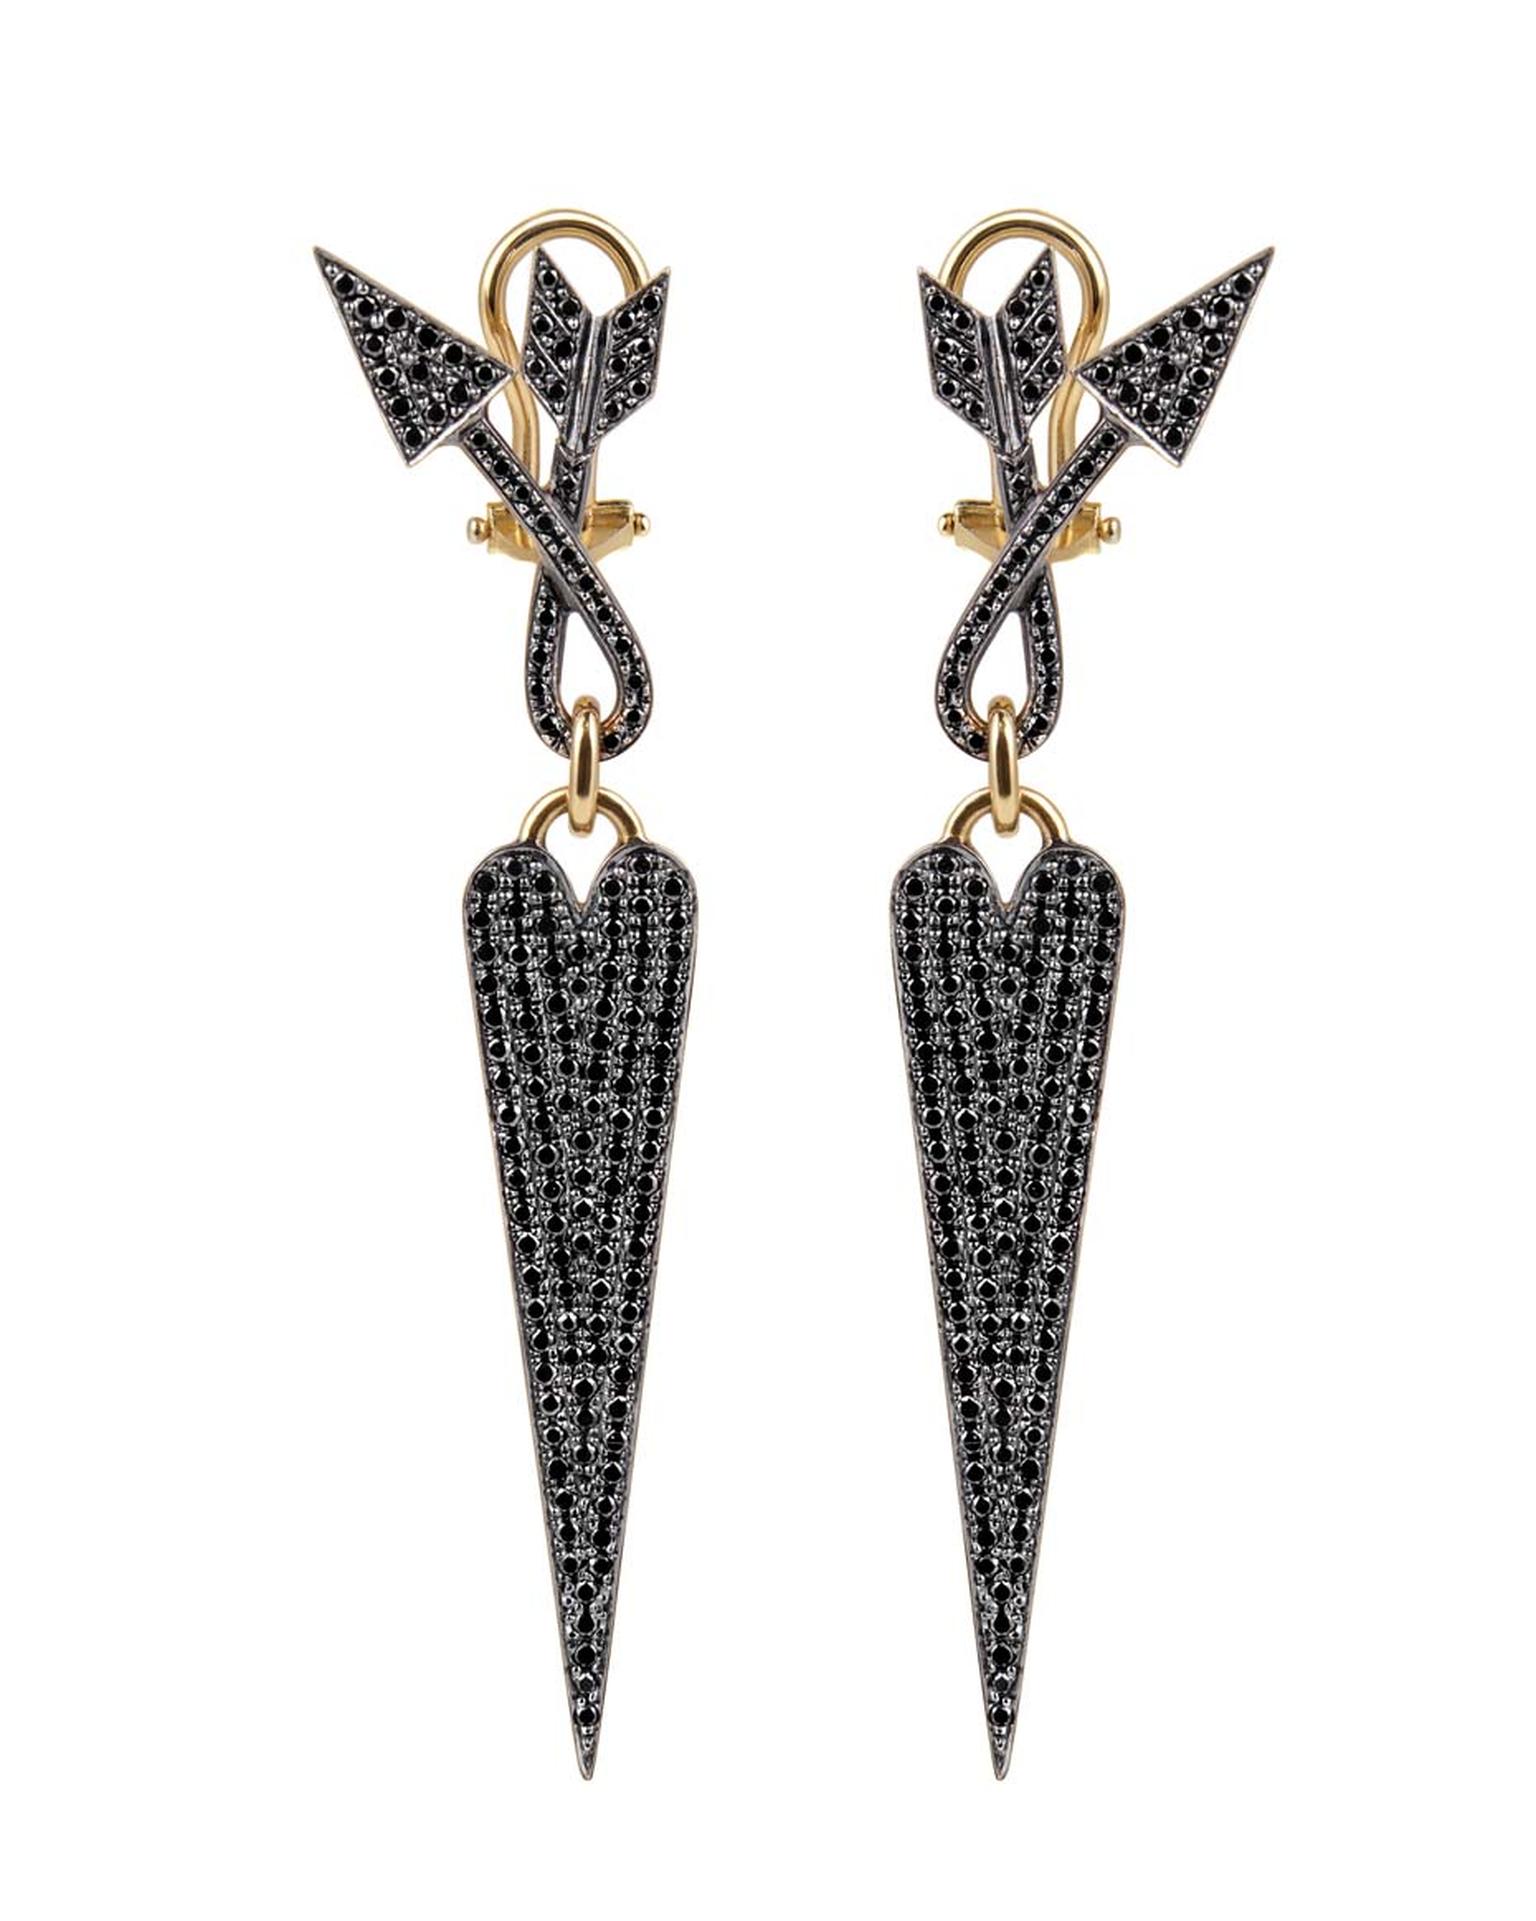 Elena Votsi Eros Passion earrings